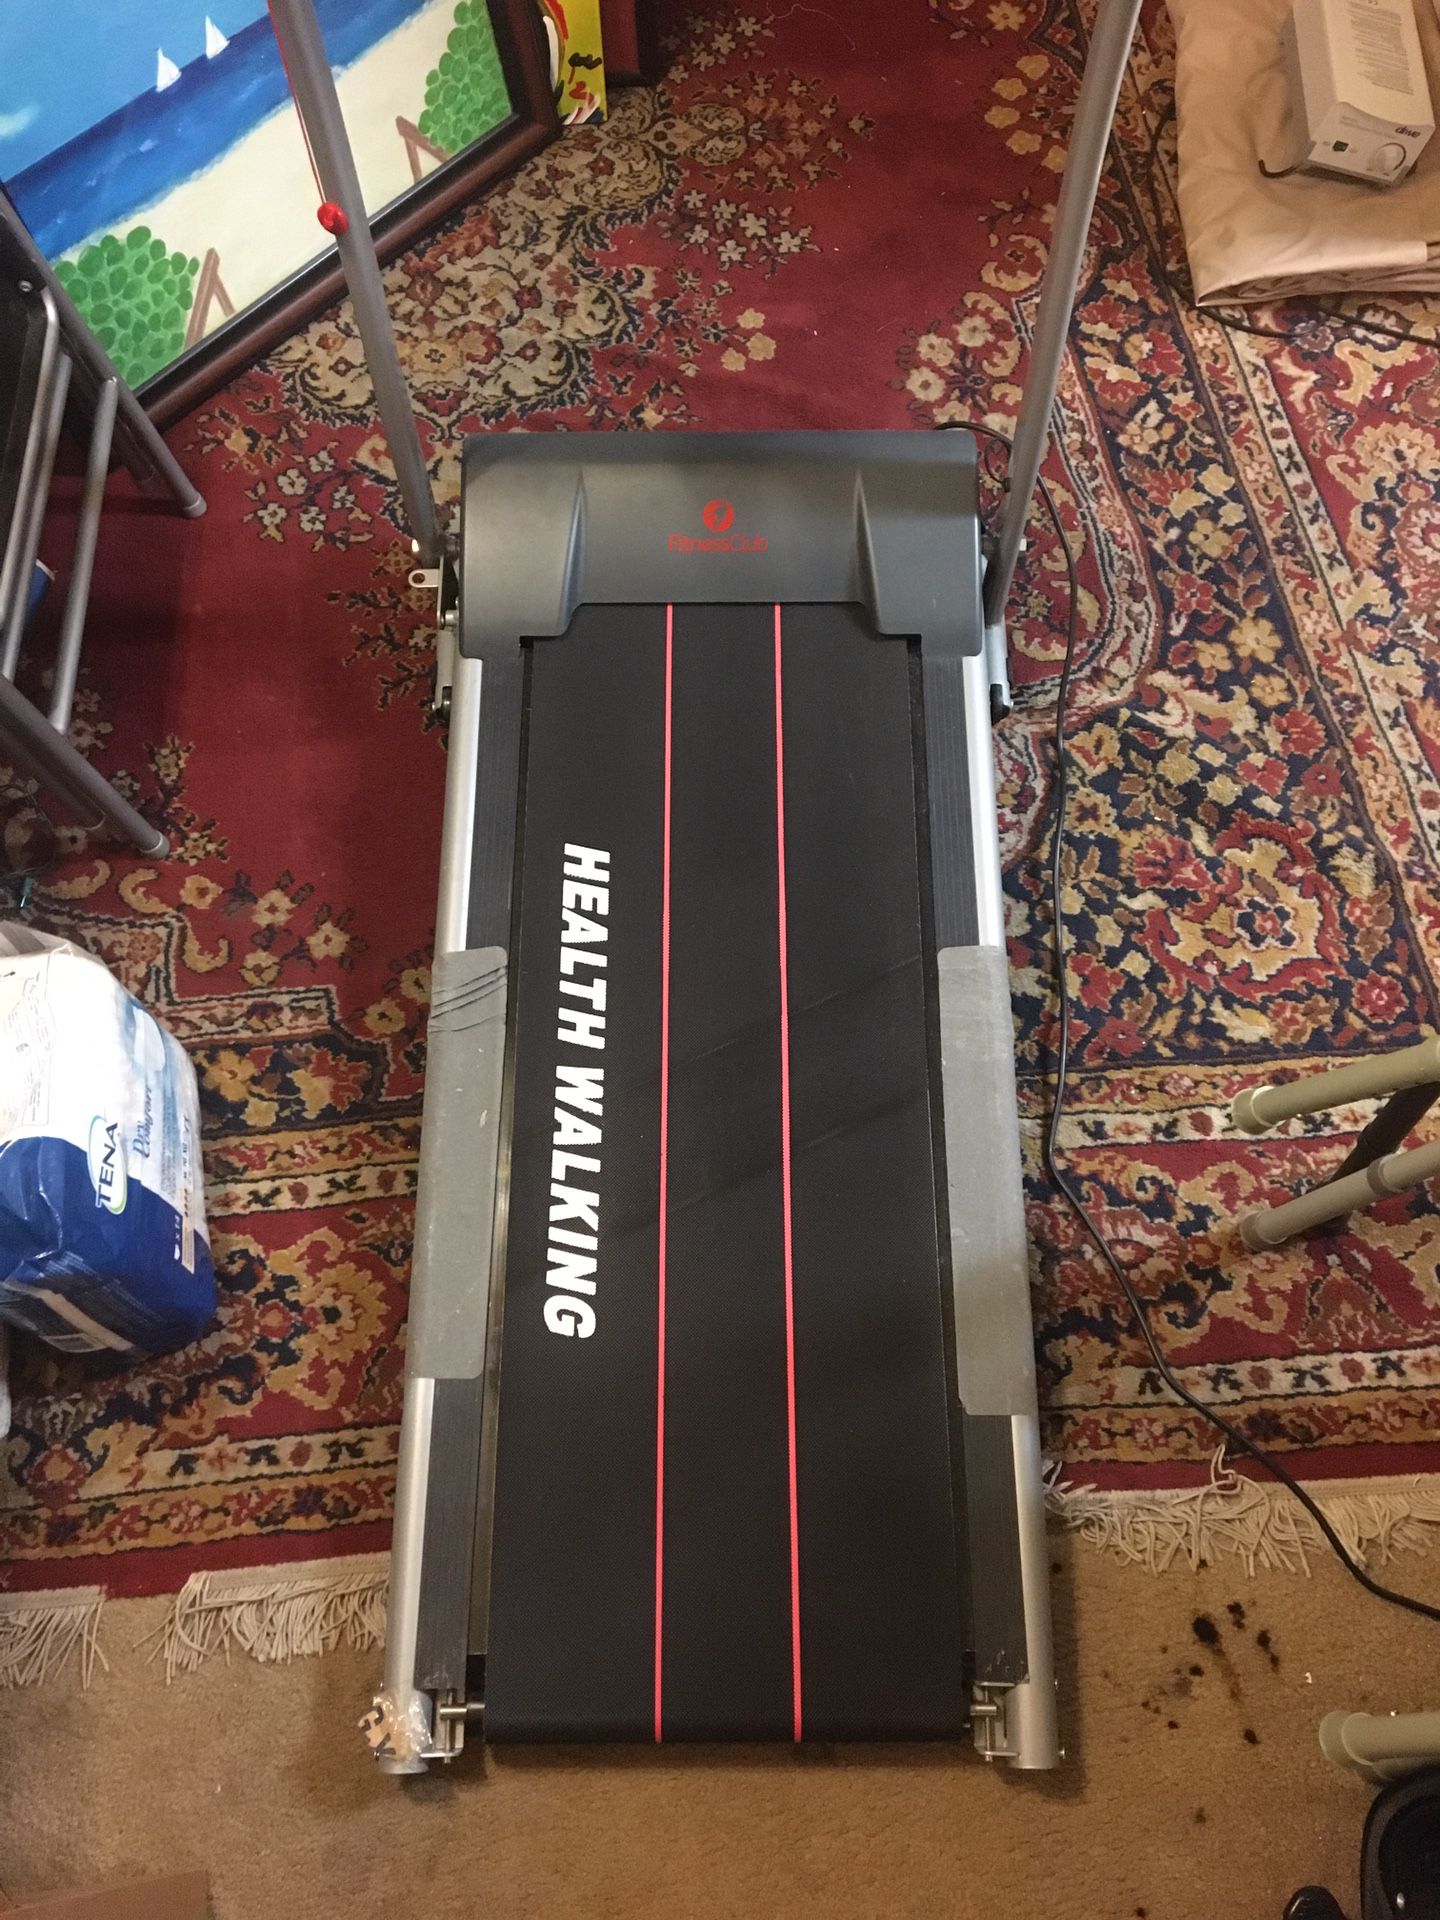 FitnessClub Health Walking Treadmill - Negotiable!